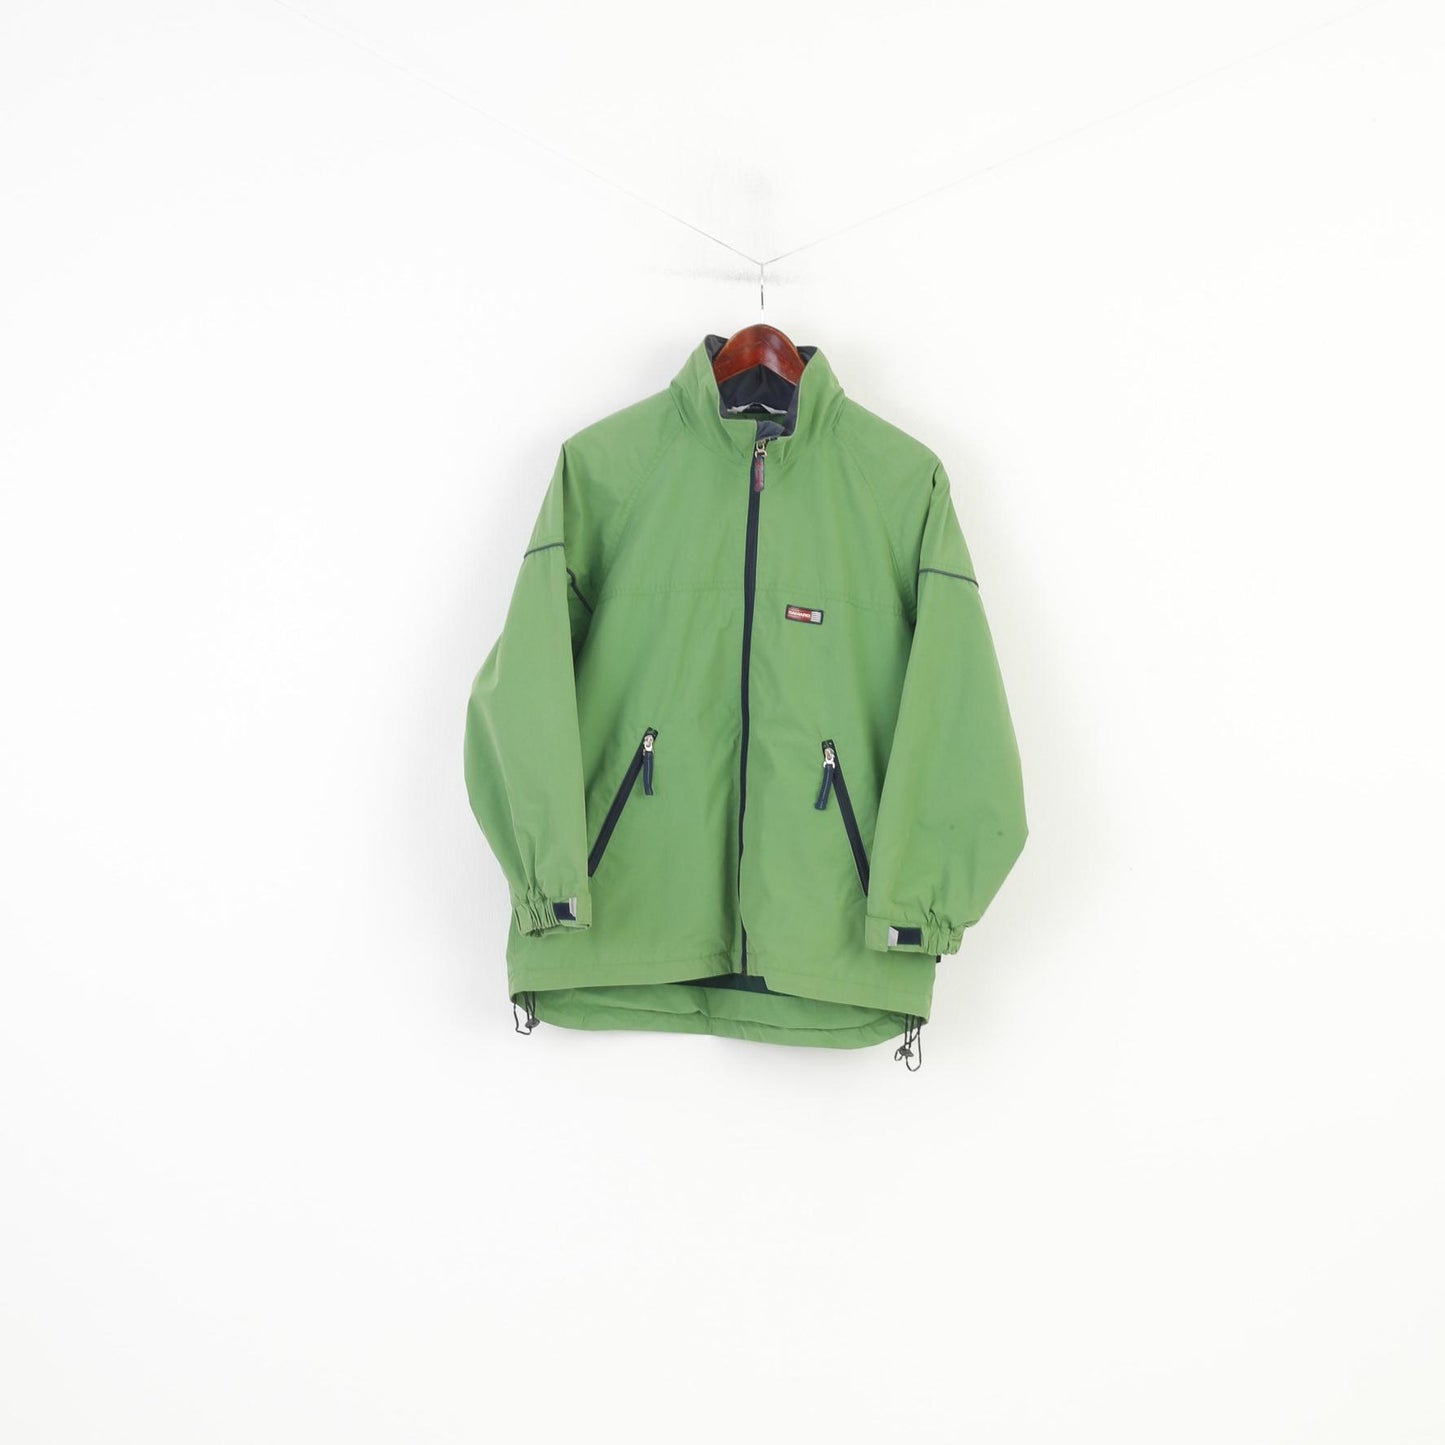 CAMARO Boys 152 Jacket Green Hood Windcheater Full Ziper Padded Vintage Top